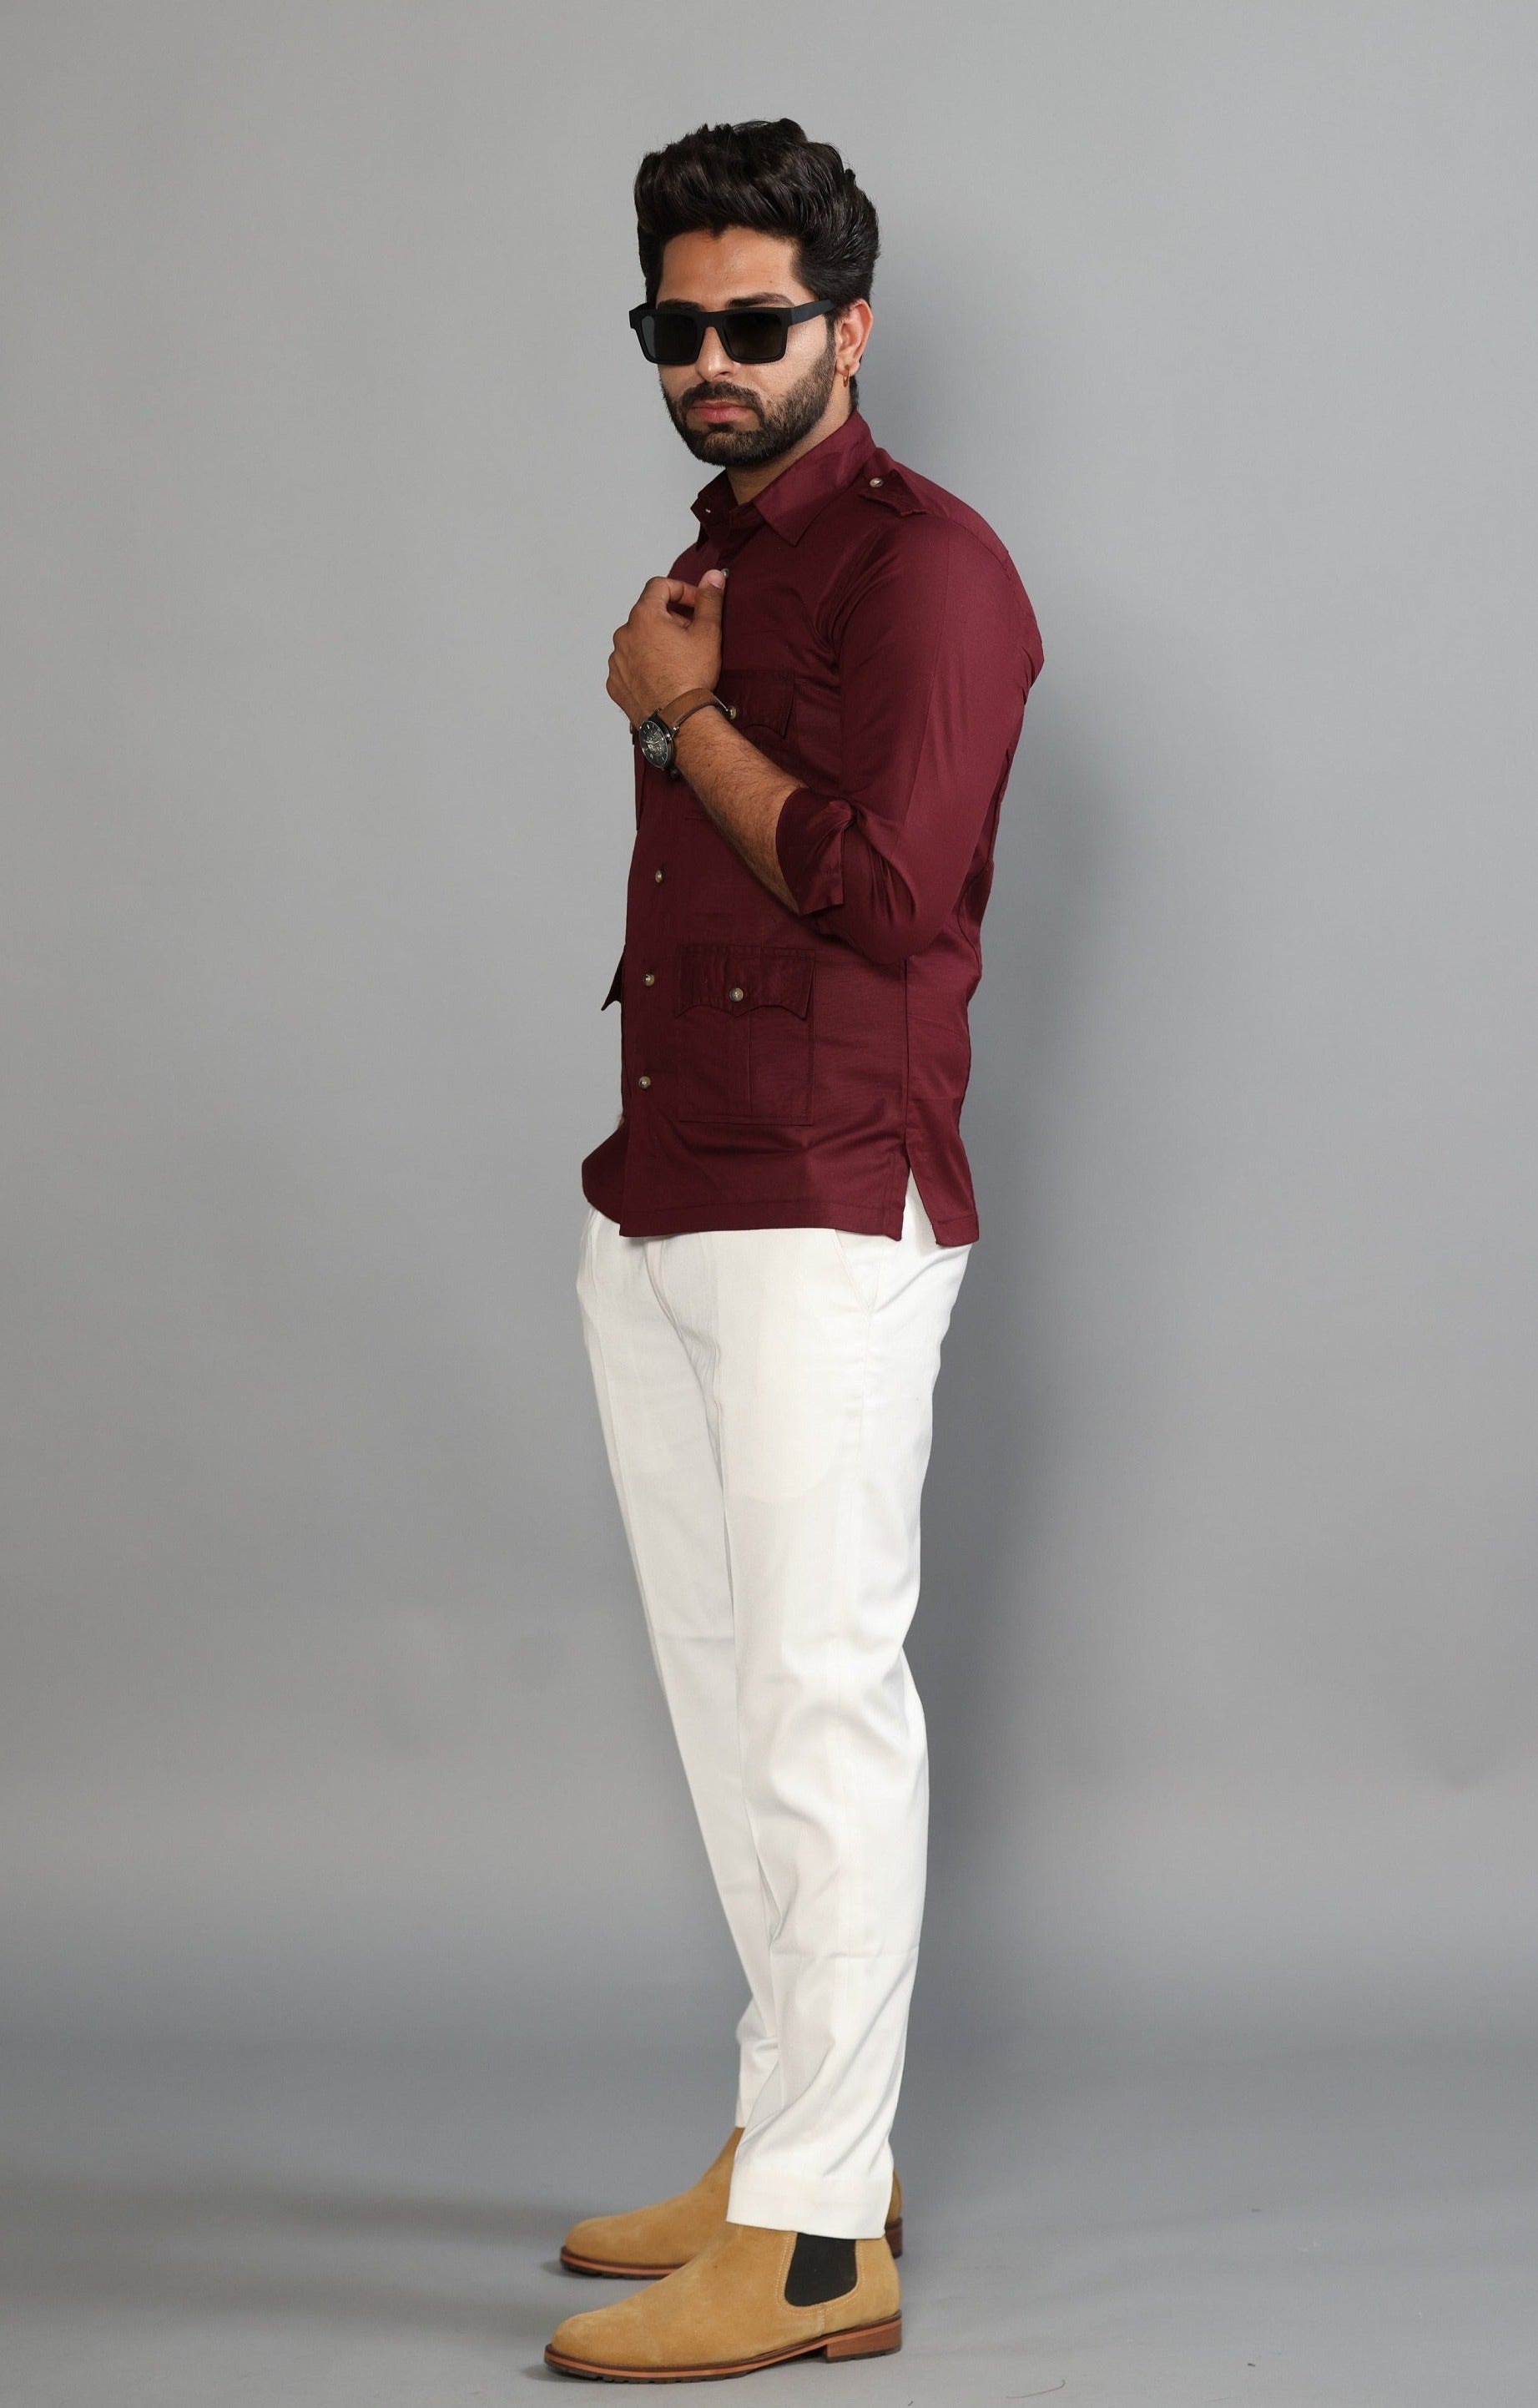 Burgundy Slacks | Burgundy pants, Men shirt style, Mens outfits